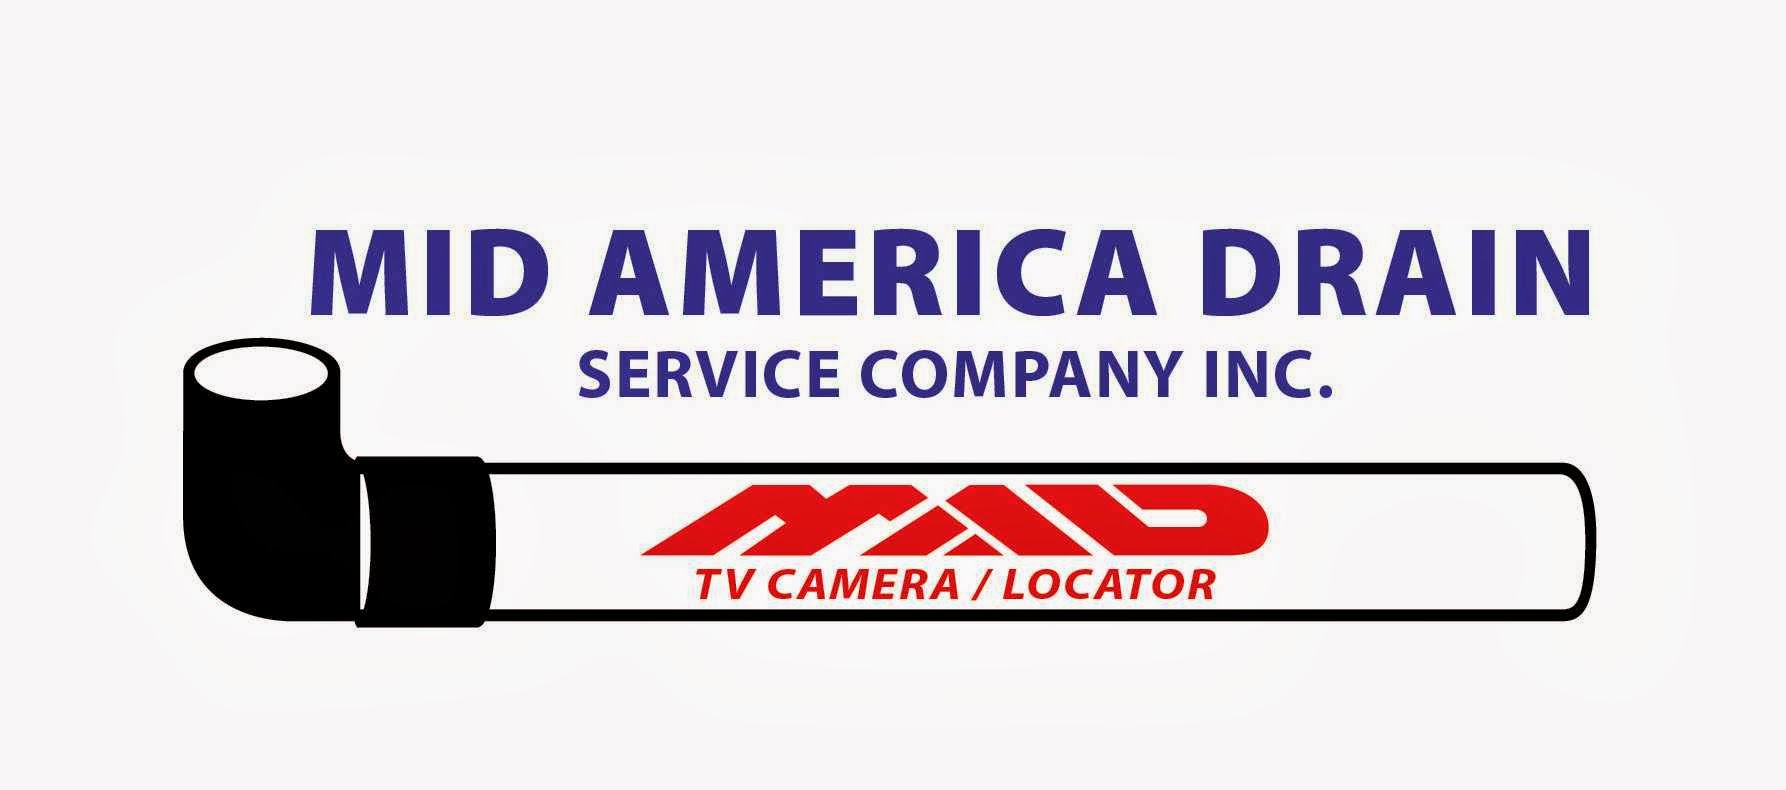 Mid America Drain Services 636 Marshall Rd, Valley Park Missouri 63088